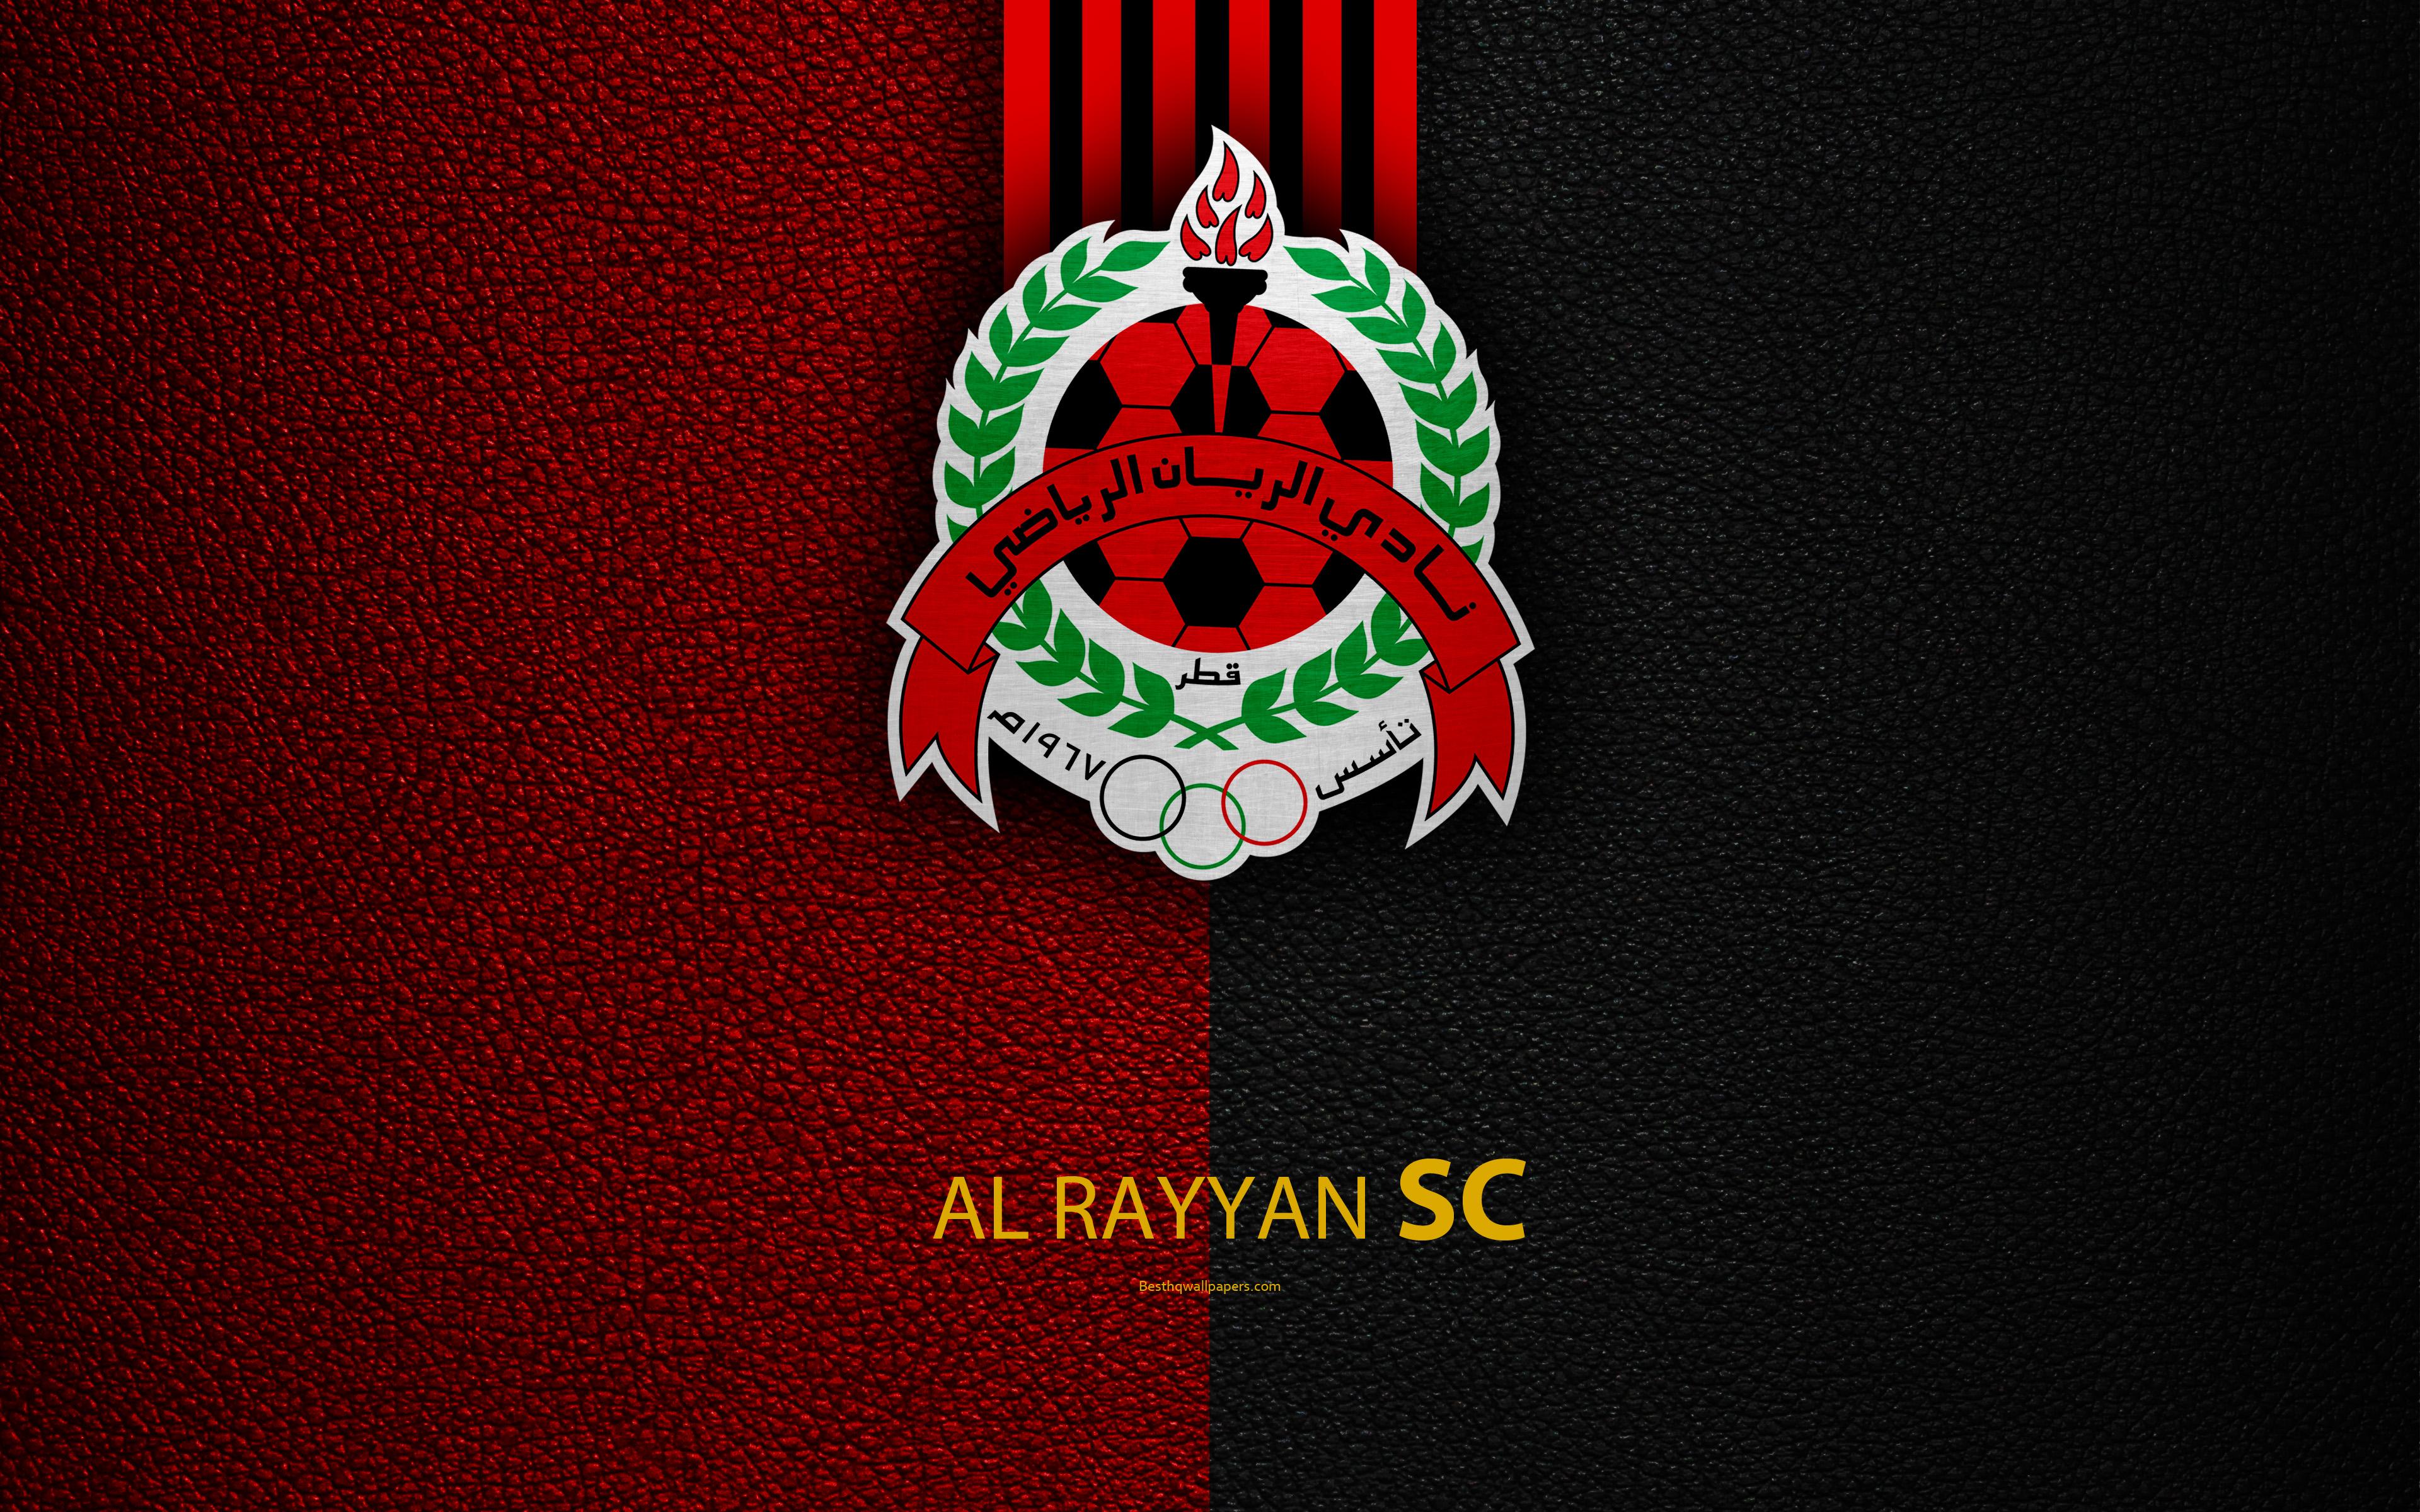 Download wallpaper Al Rayyan SC, 4k, Qatar football club, leather